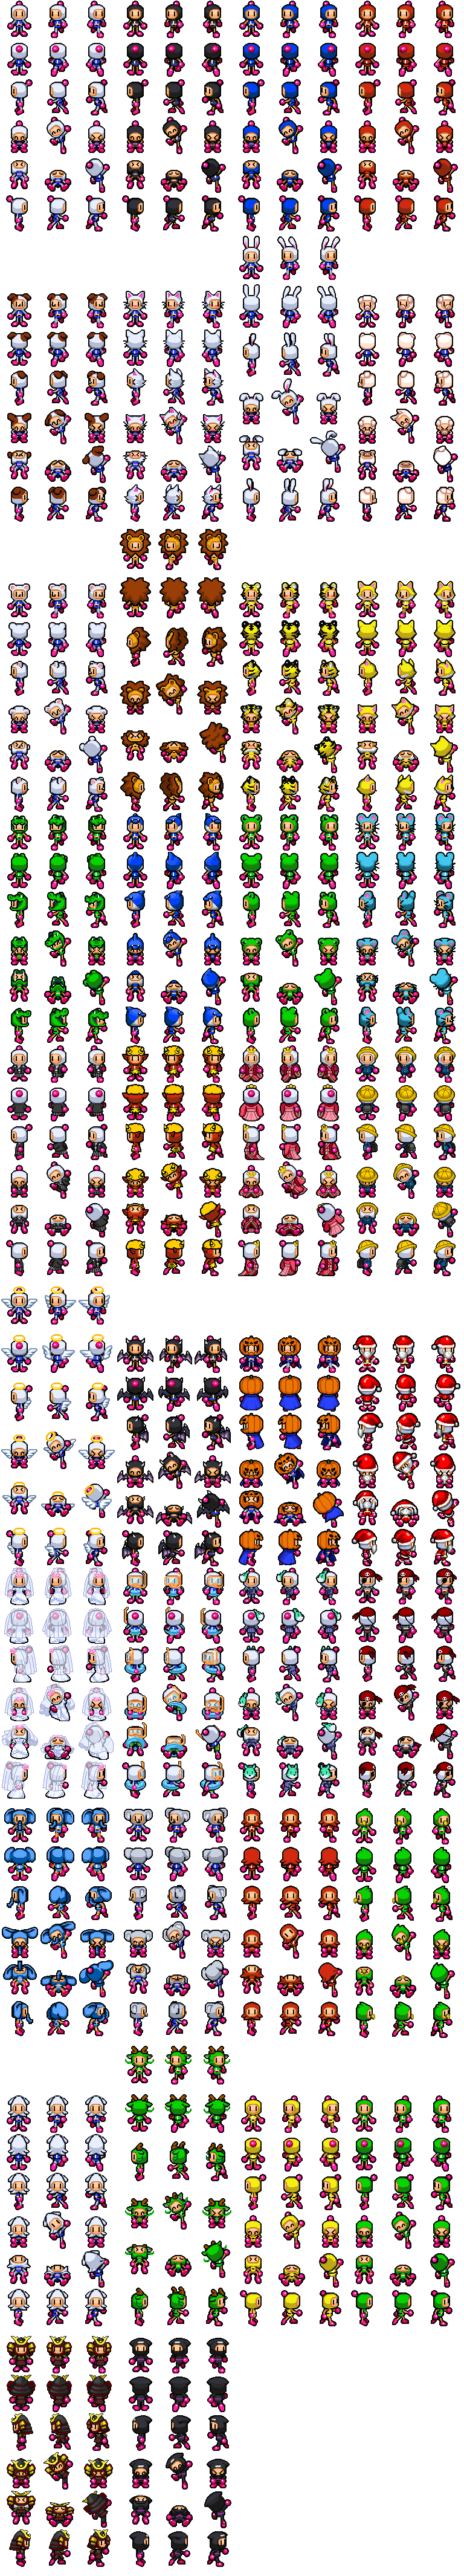 Mobile - Bomberman 100 Man Battle - Bomberman - The Spriters Resource